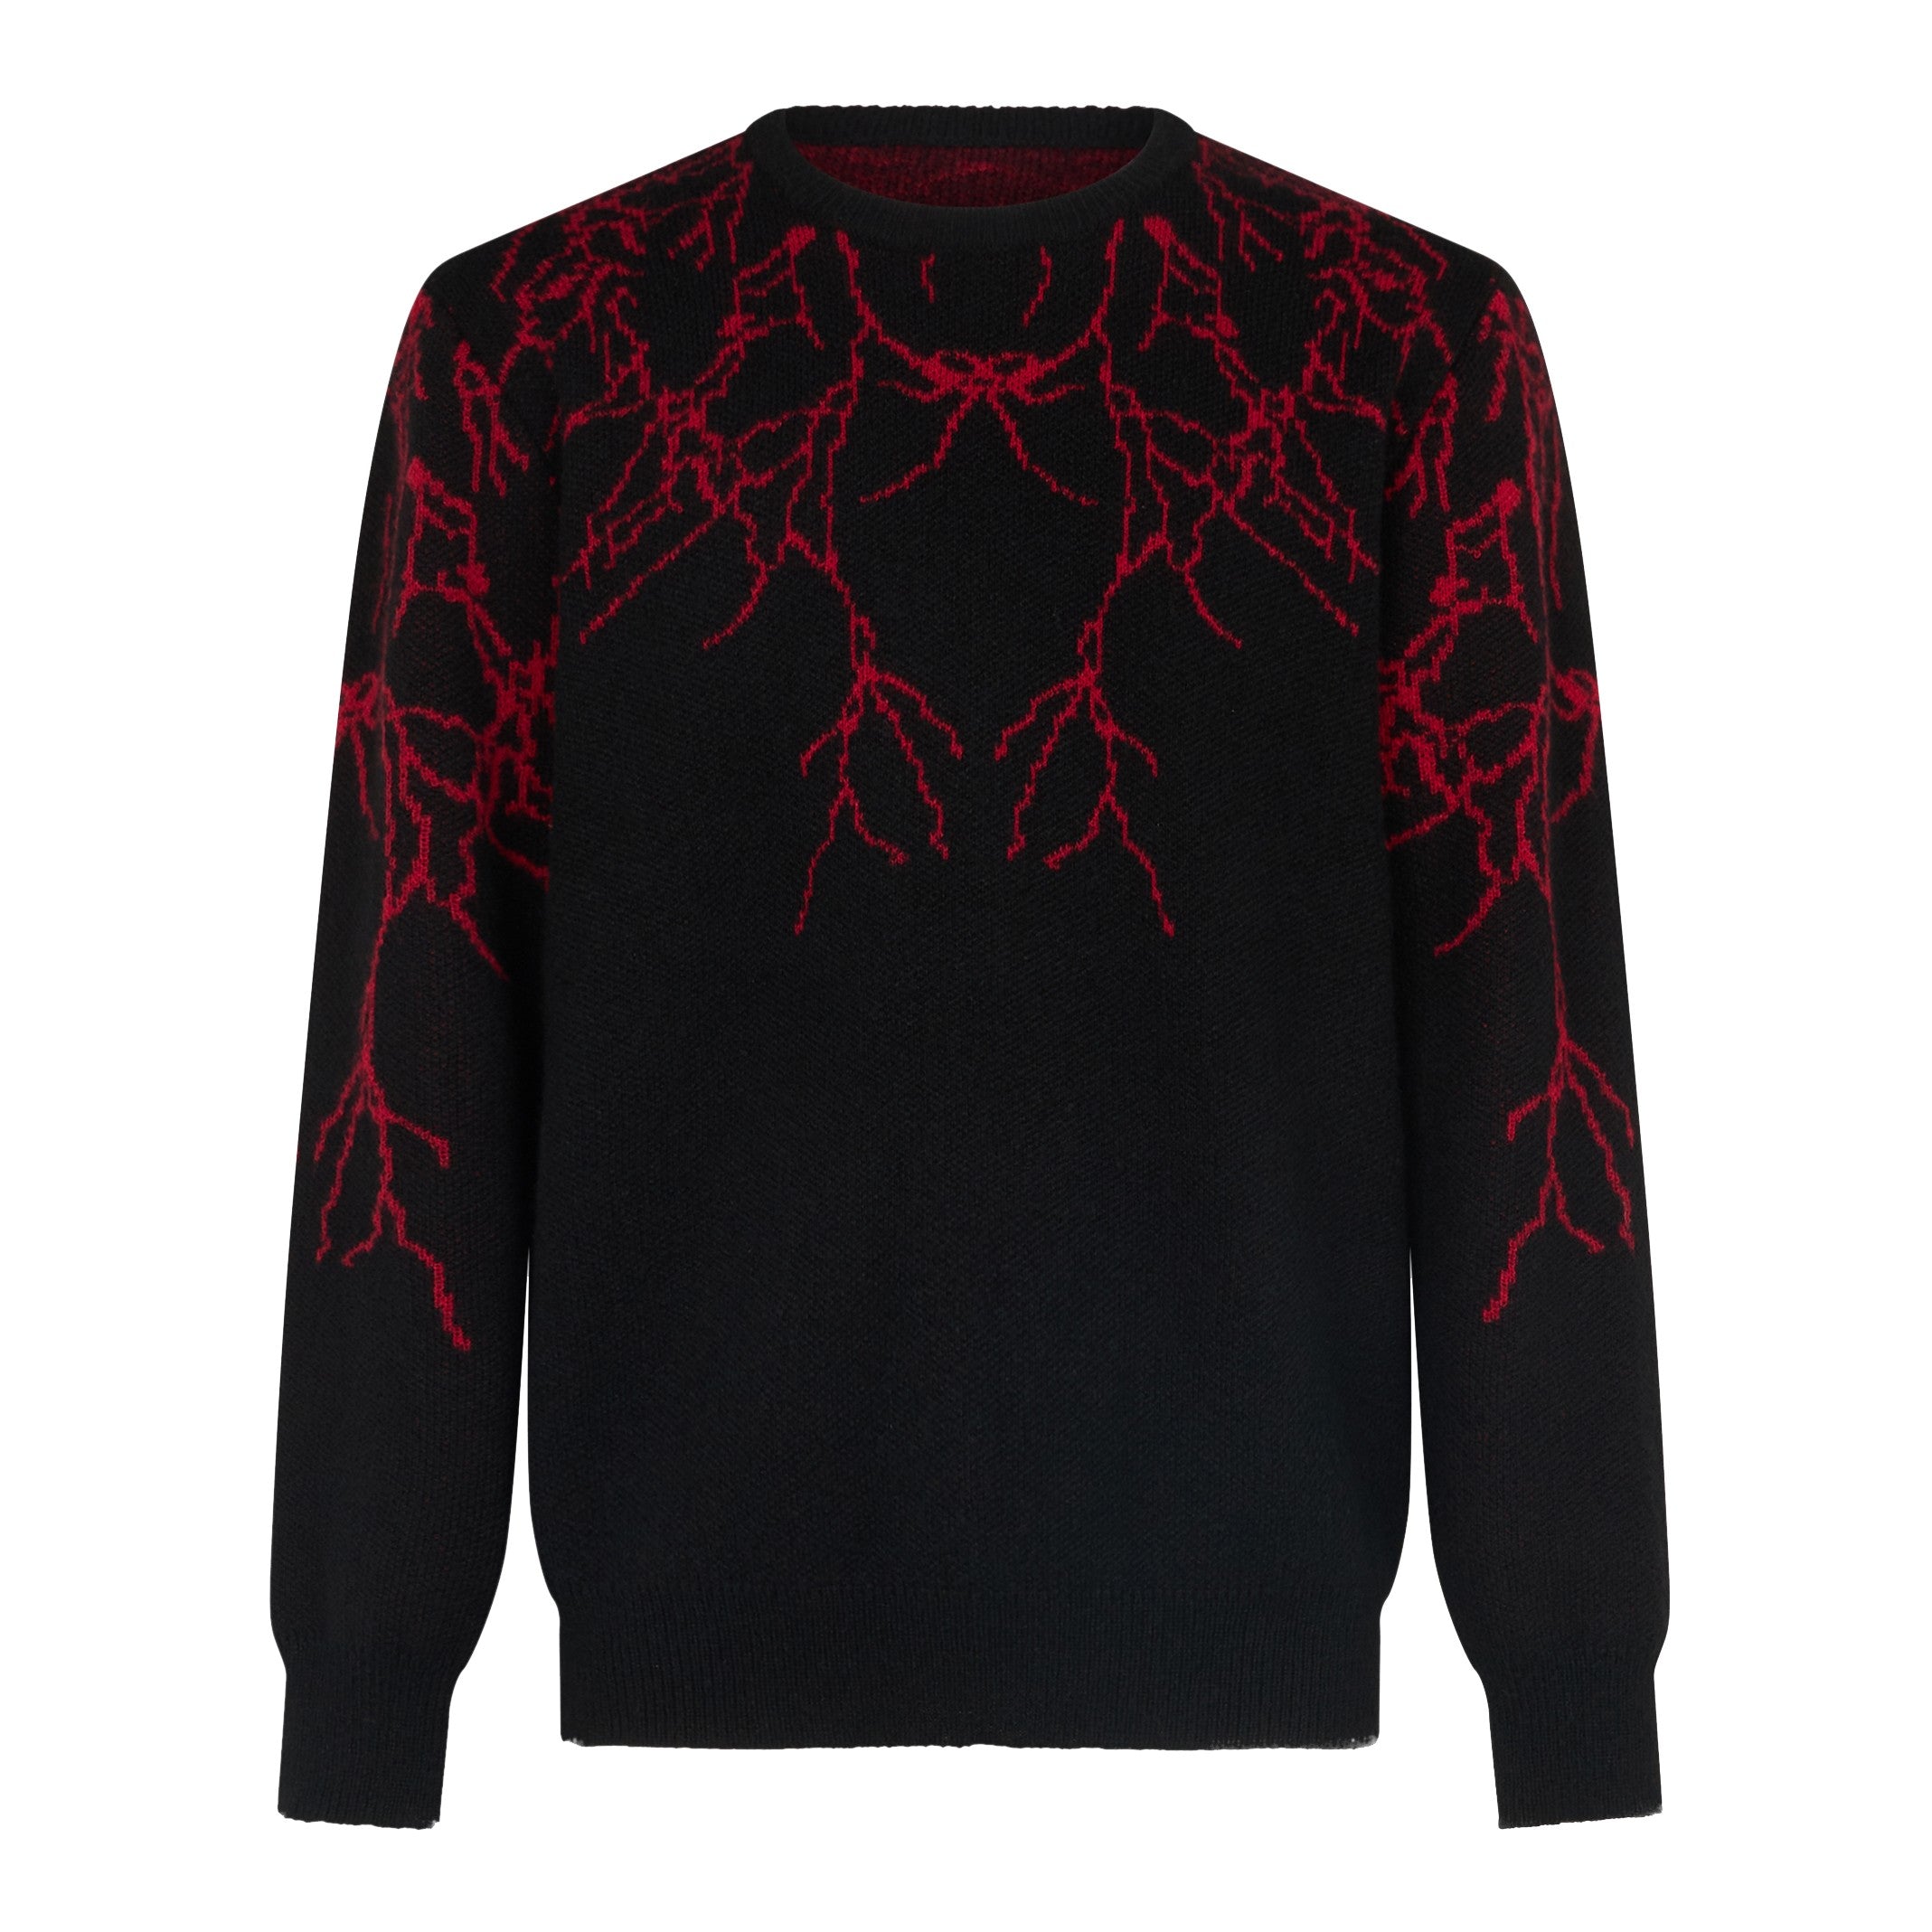 Men's Lightning Jumper Sweater Black/red